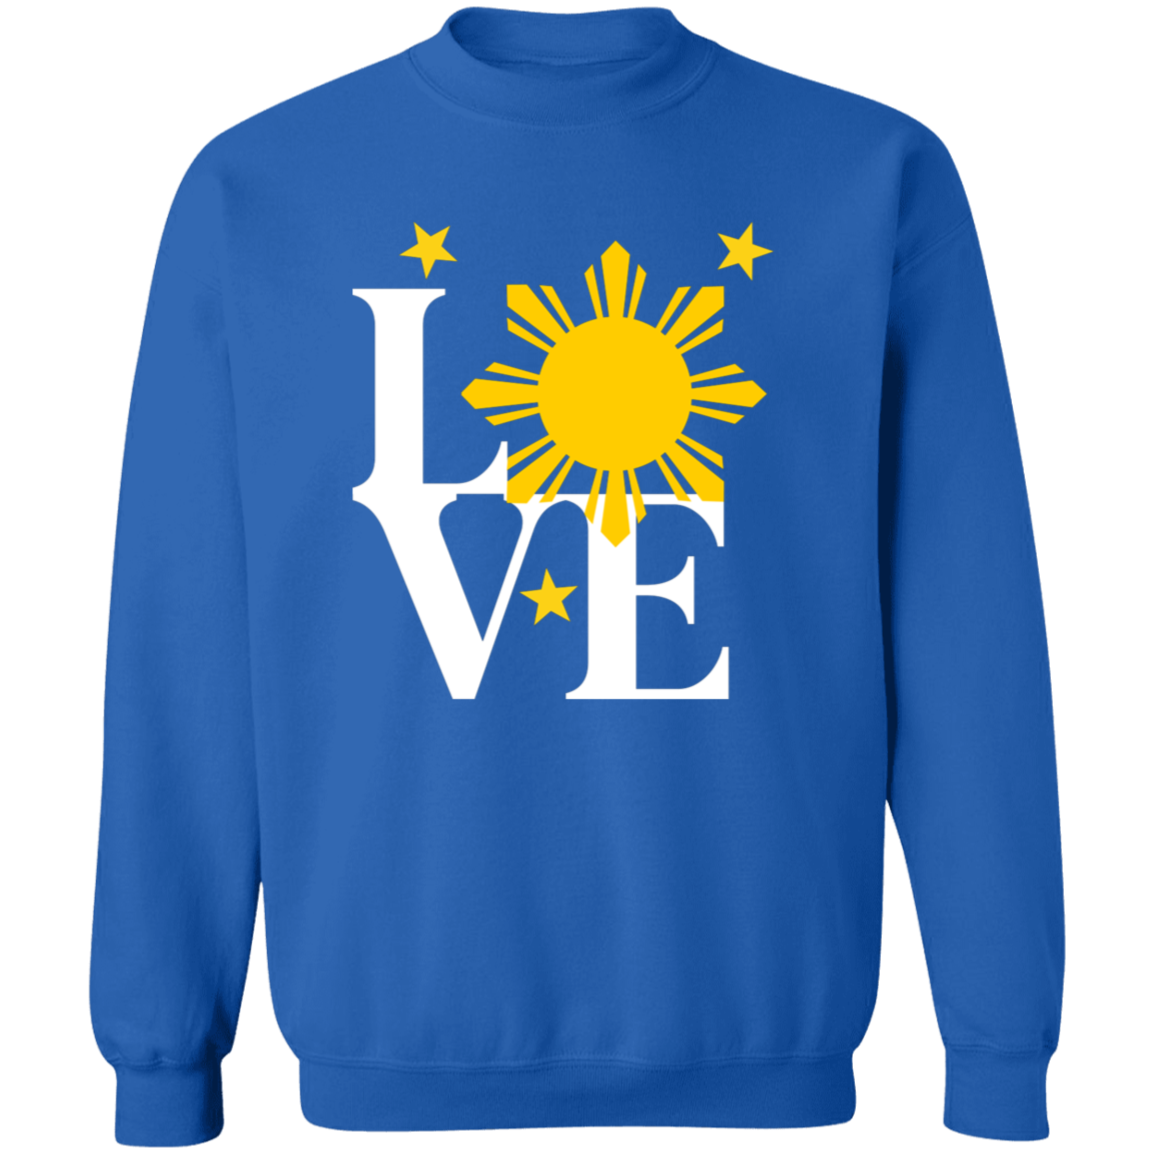 Love with Yellow Sun and Stars Unisex Crewneck Pullover Sweatshirt